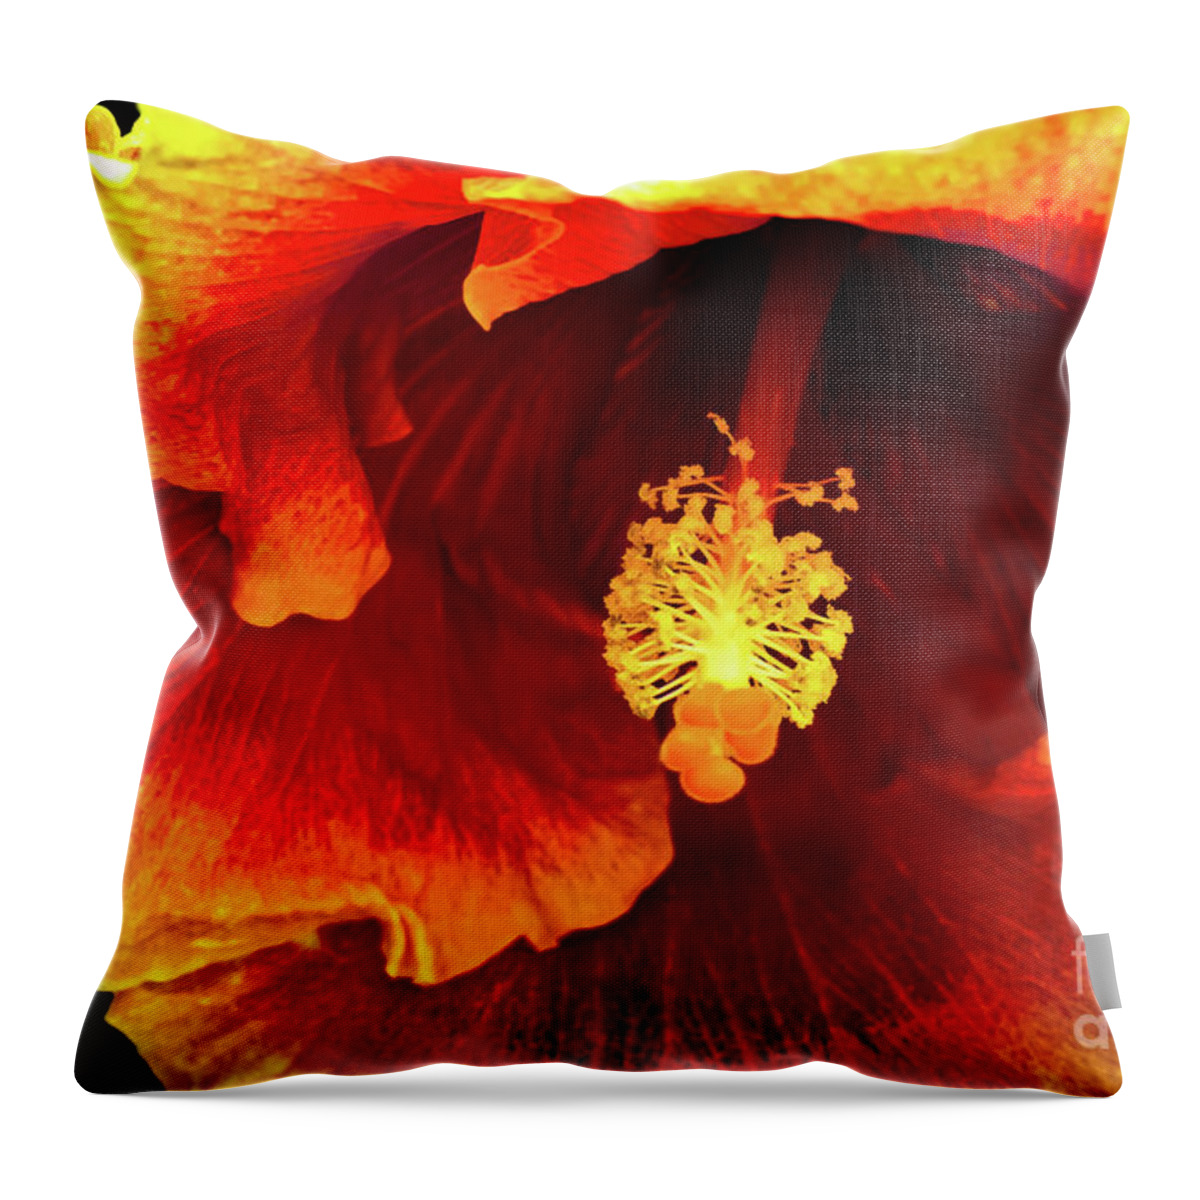 Floral Throw Pillow featuring the digital art Hawaii dreamin by Deb Nakano